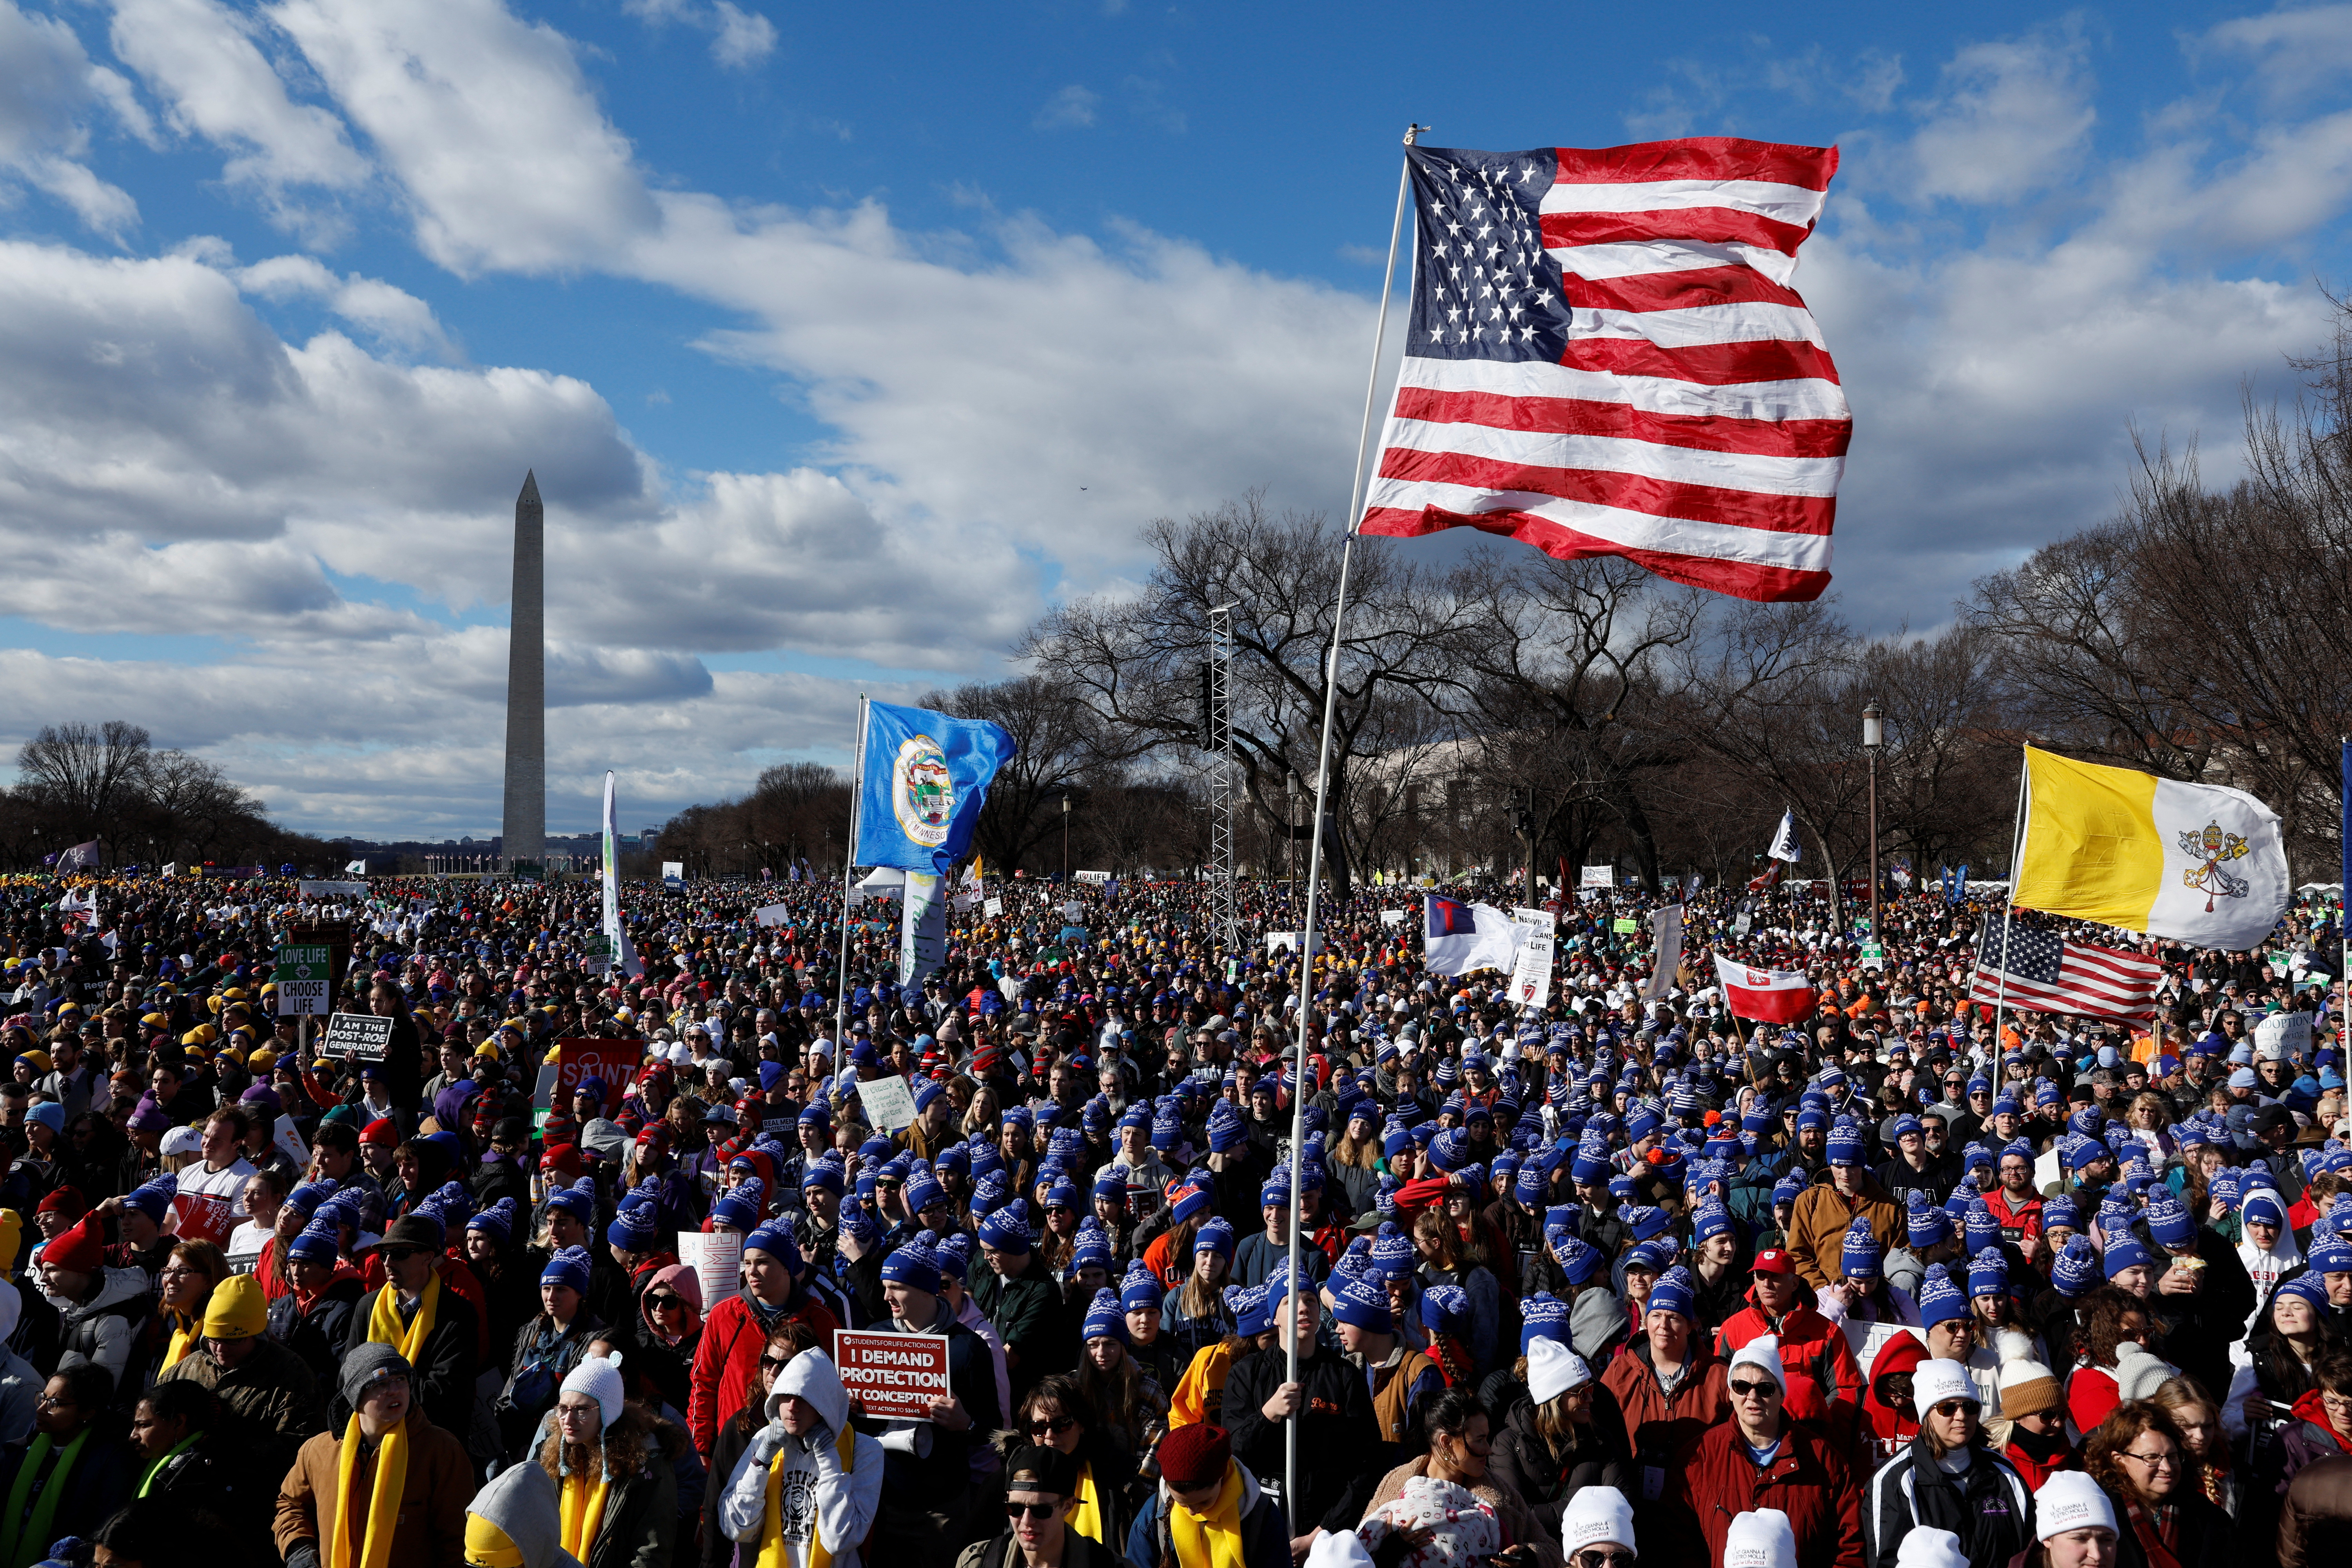 Anti-abortion demonstrators march in Washington